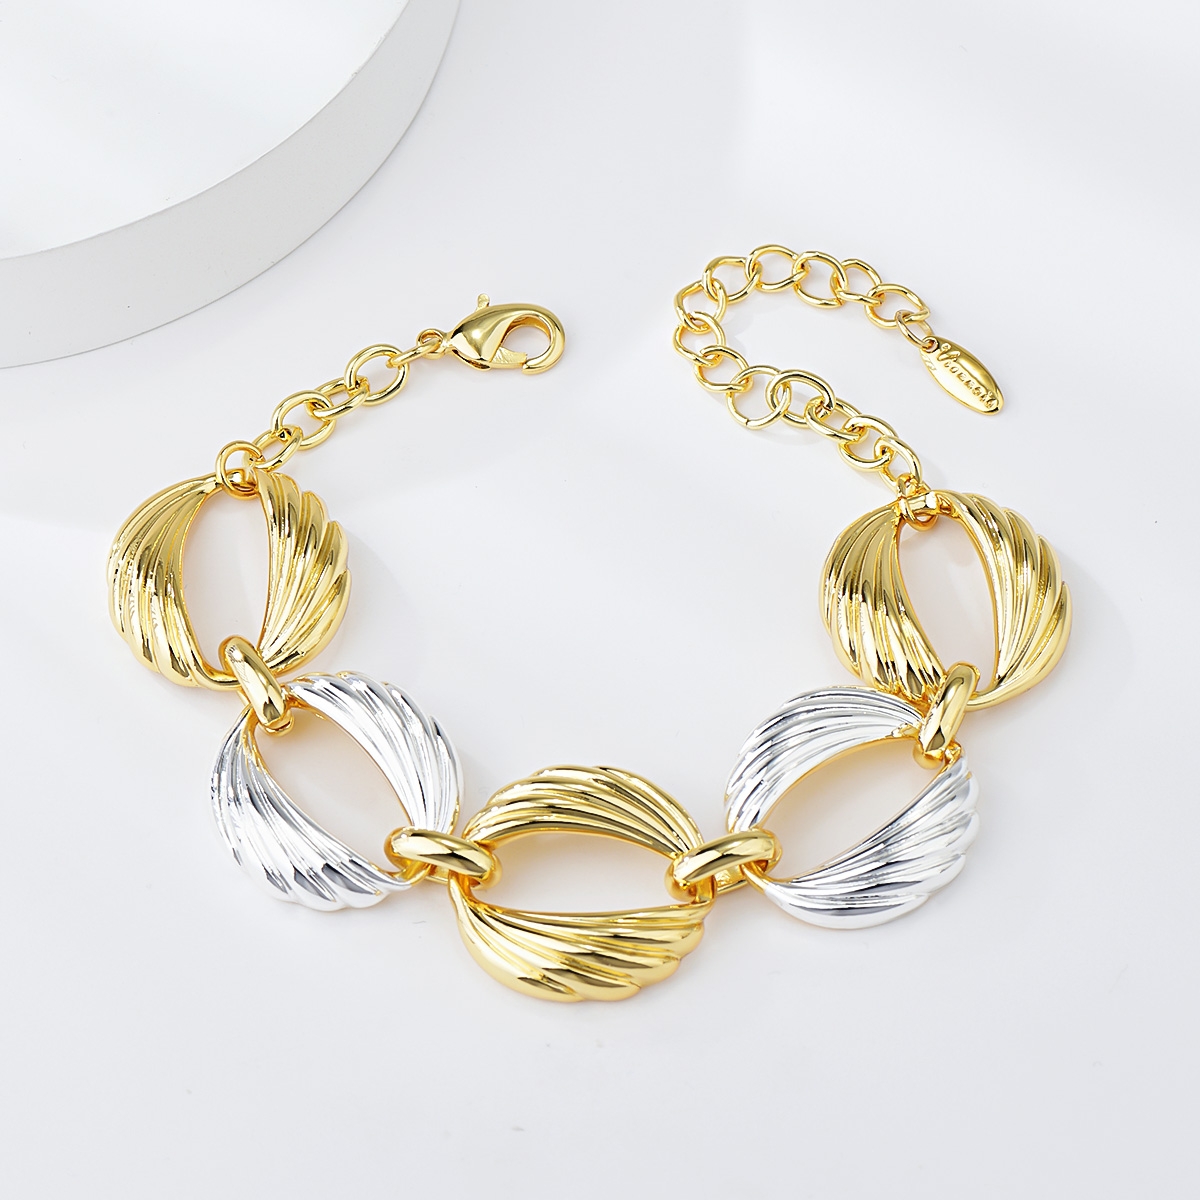 Charming Gold Plated Dubai Fashion Bracelet As a Gift